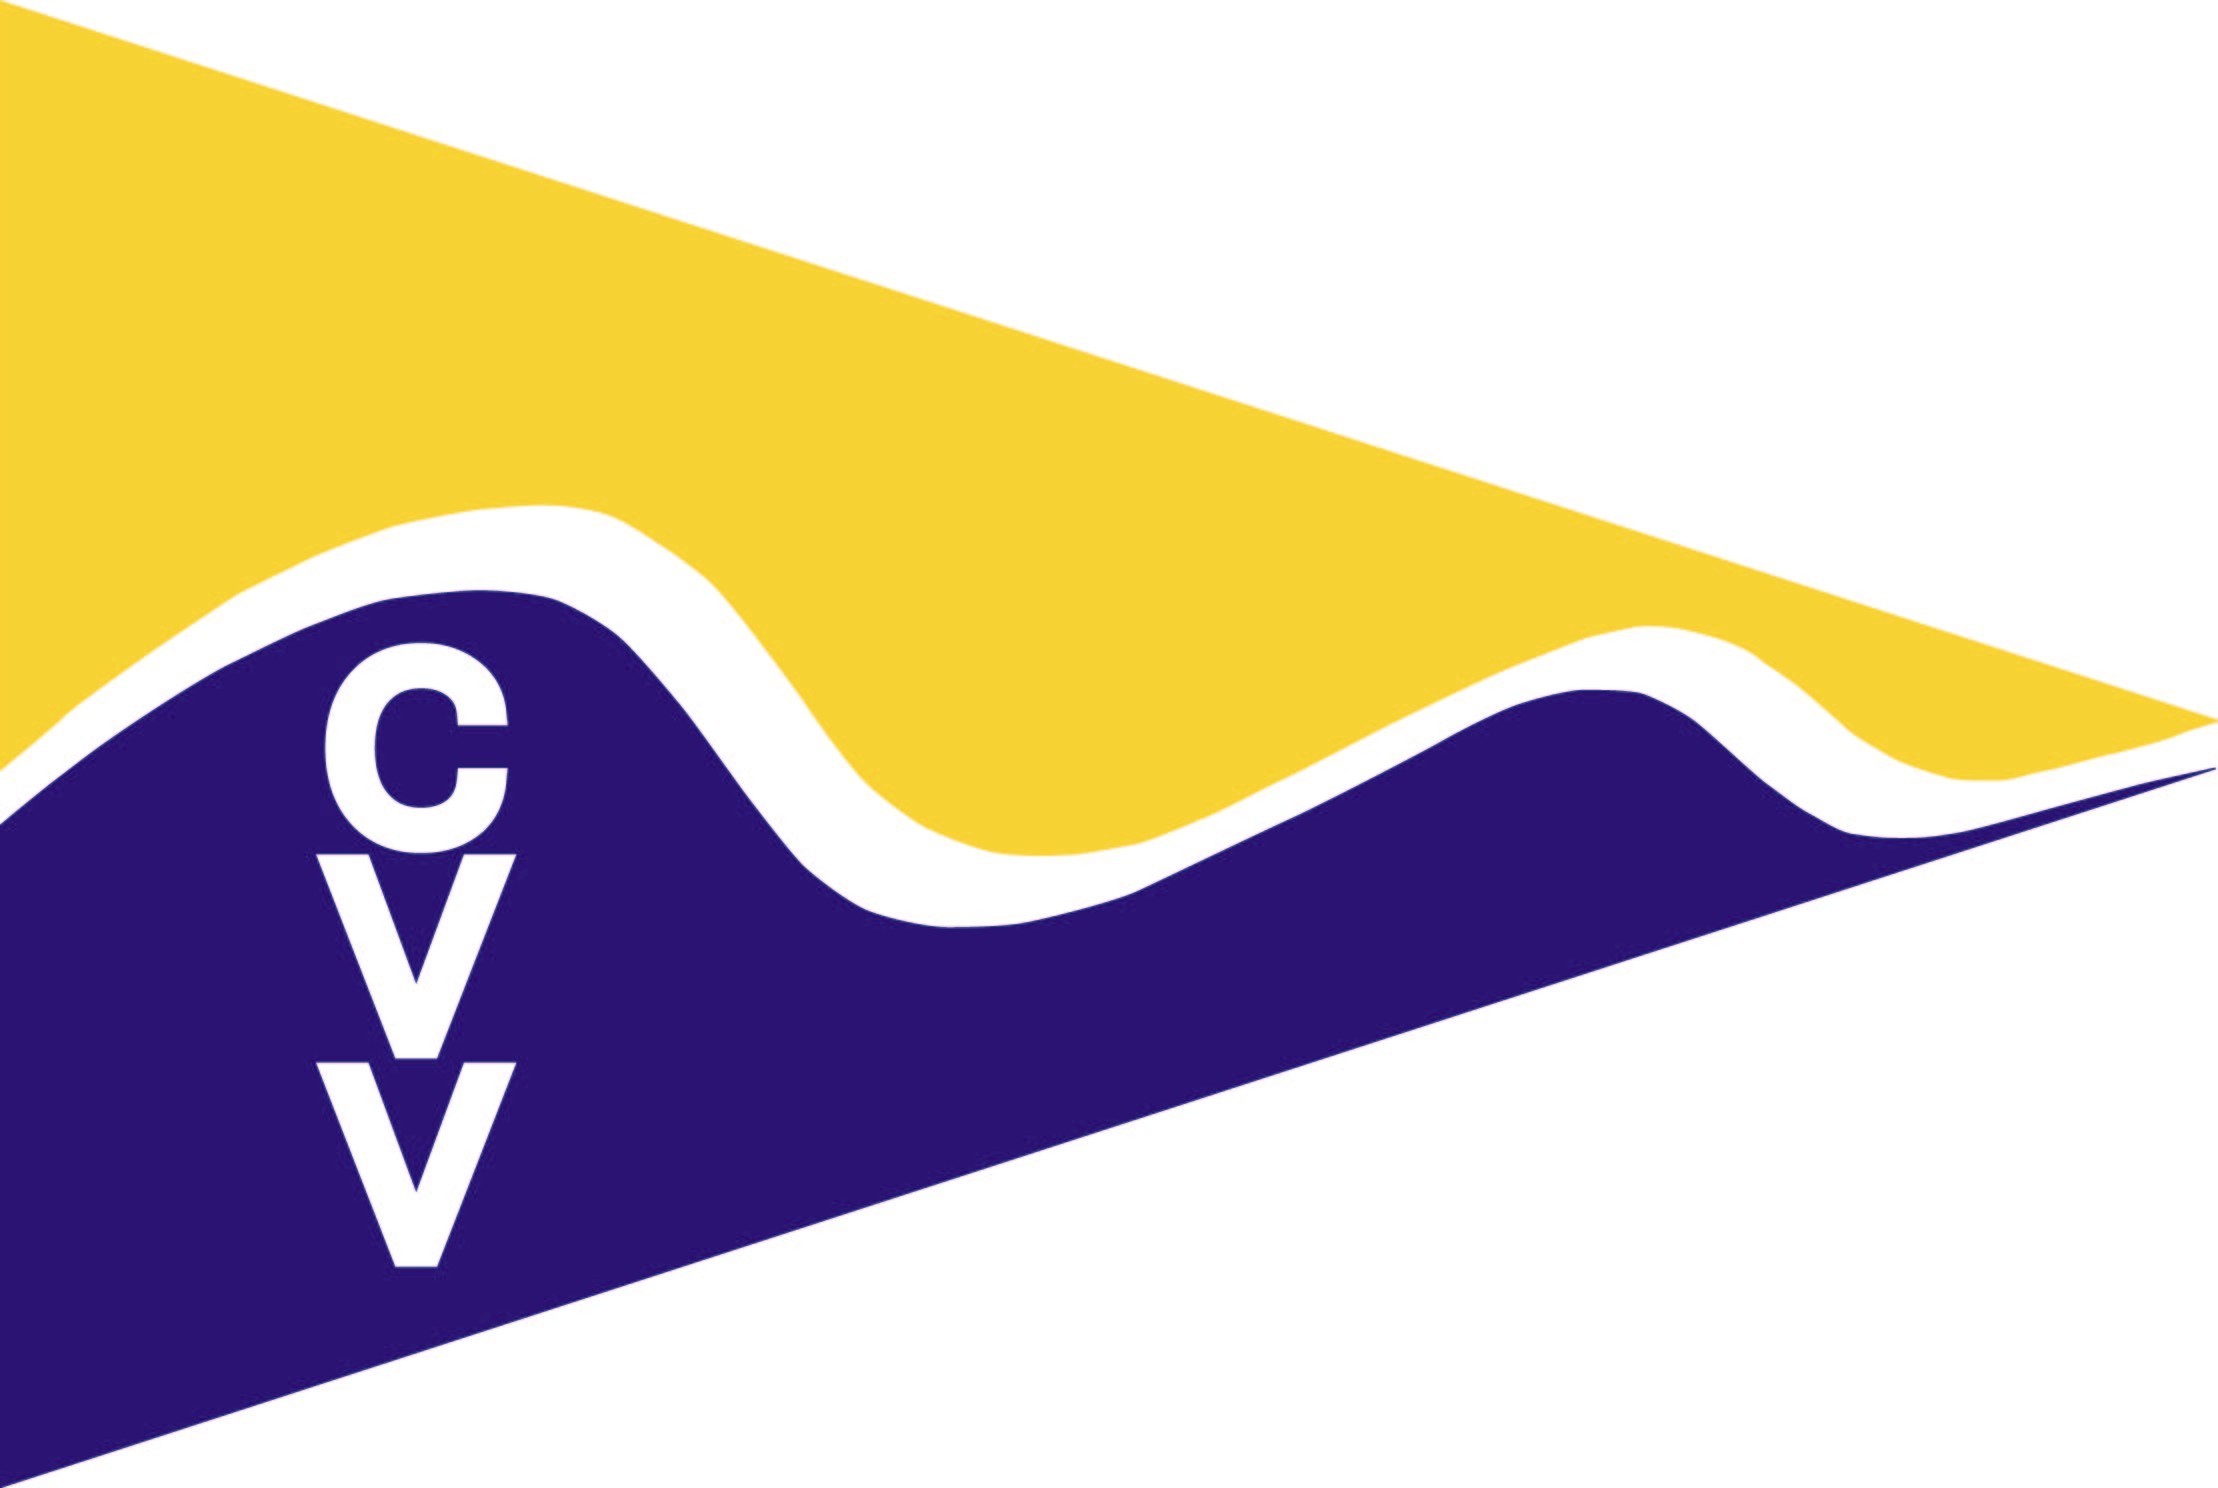  Classes ACVL  Challenge d'Hiver  CV Vidy  Race 5